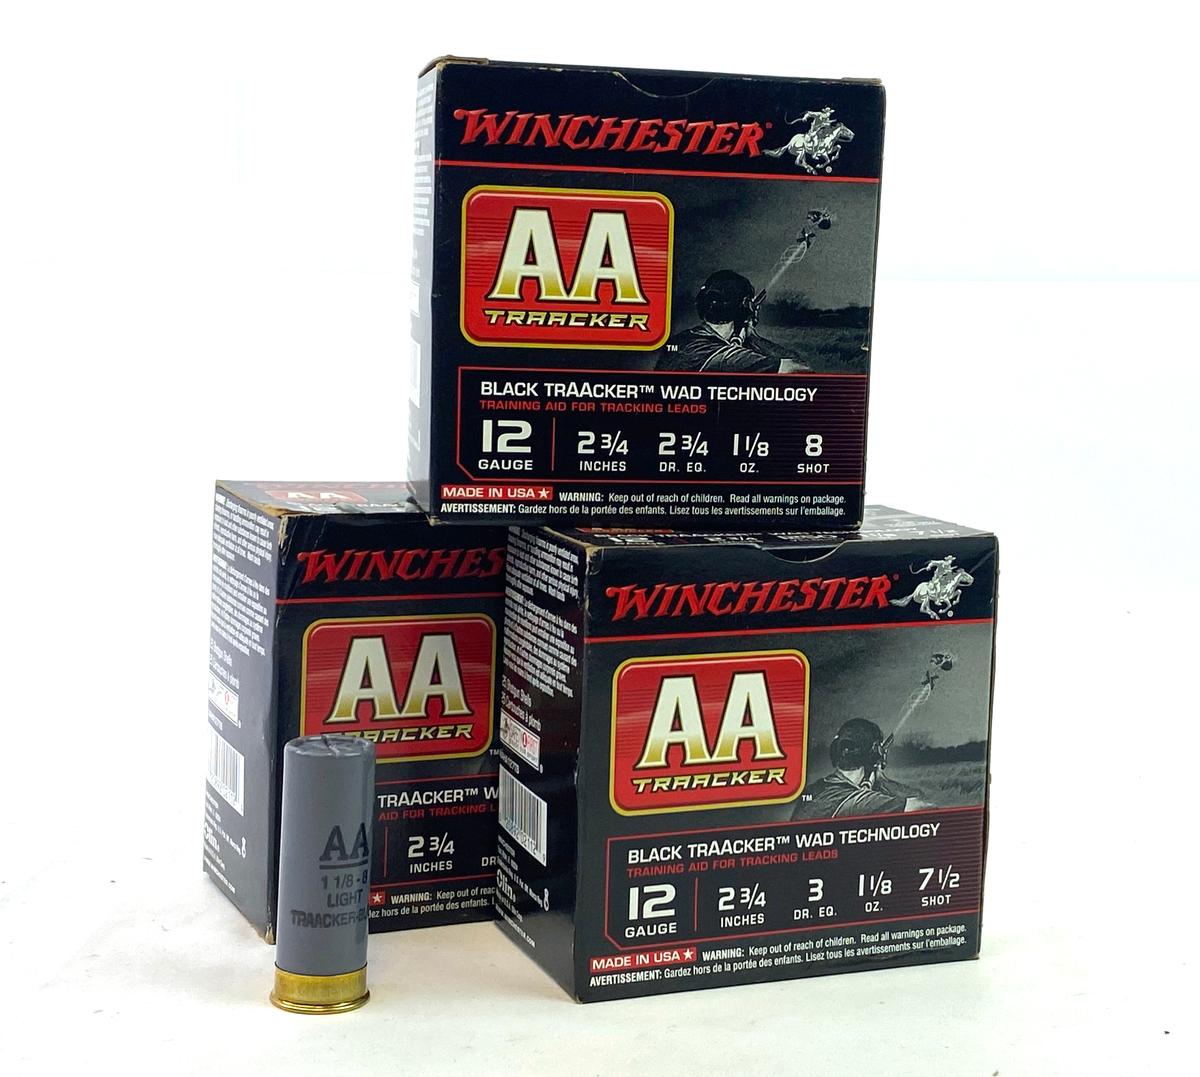 NIB 75rds. 12 GA. Winchester AA Black Traacker Wad Tech 2-3/4" Shotgun Ammunition